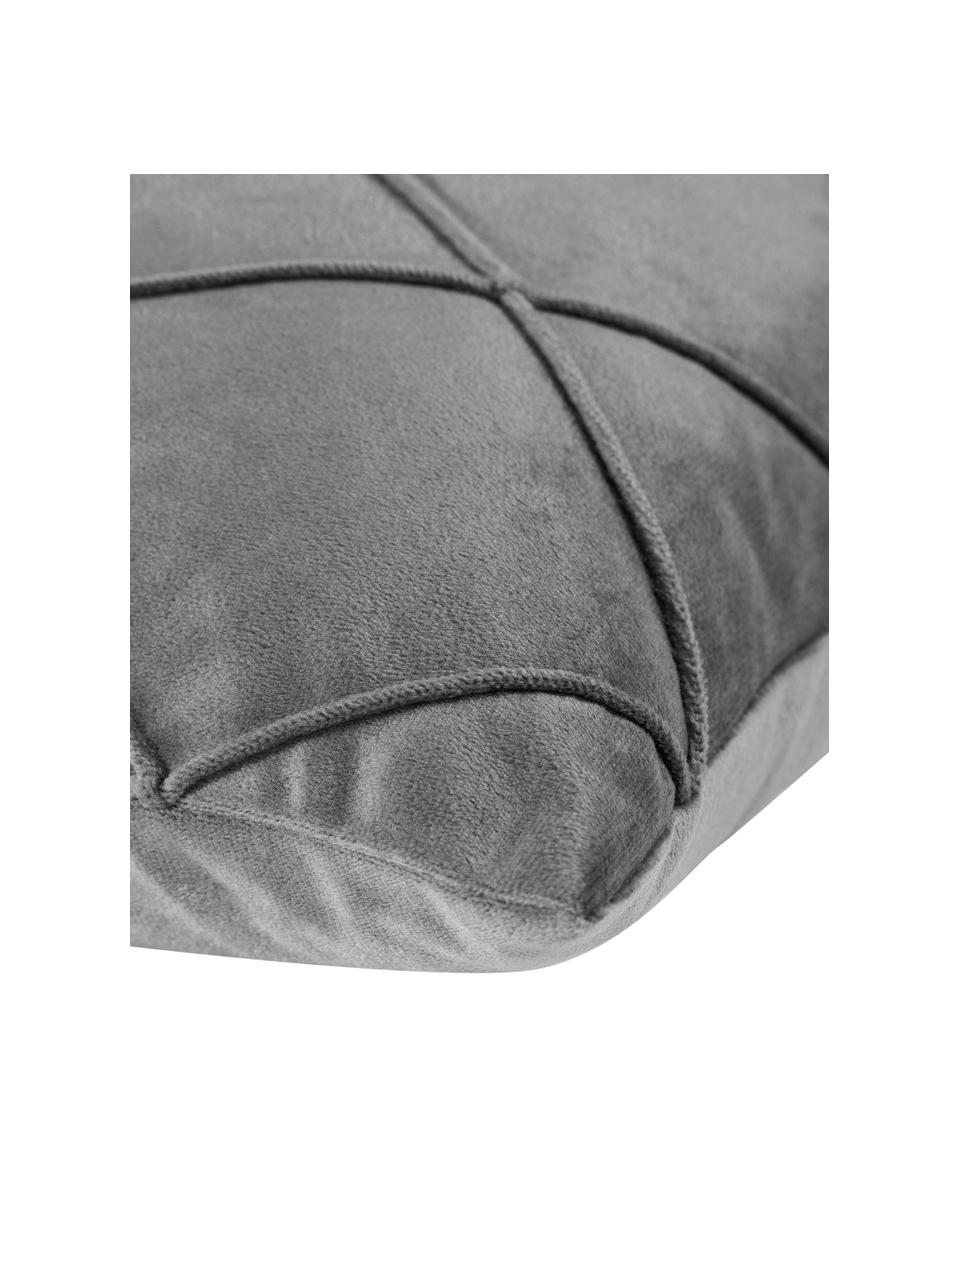 Samt-Kissenhülle Nobless mit erhabenem Rautenmuster, 100% Polyestersamt, Grau, B 40 x L 40 cm